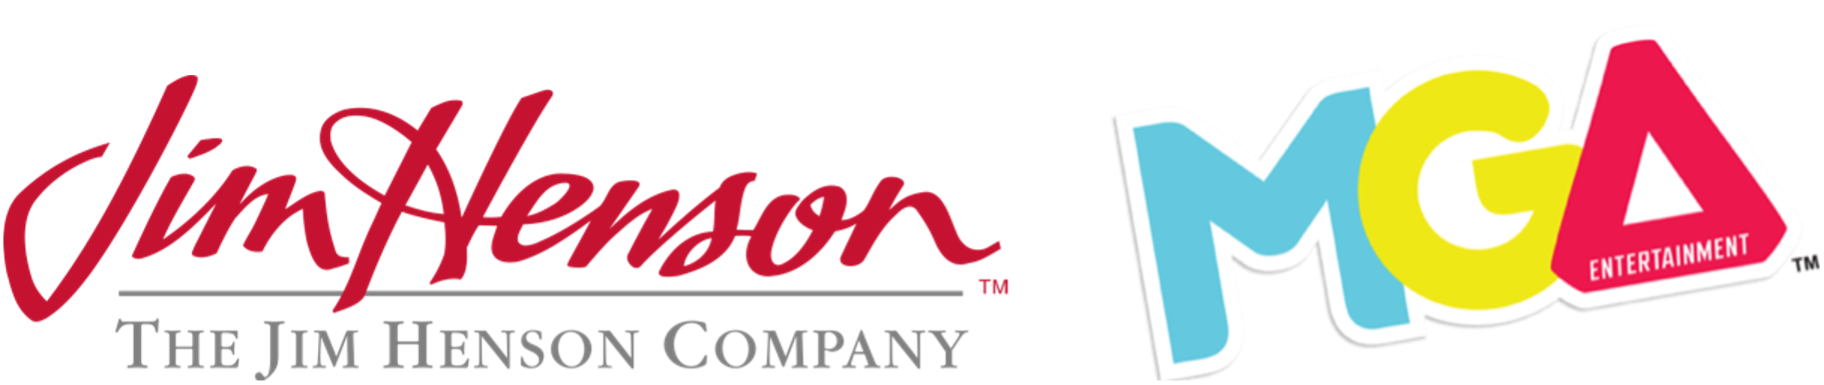 The Jim Henson Company Names MGA Entertainment Master Toy